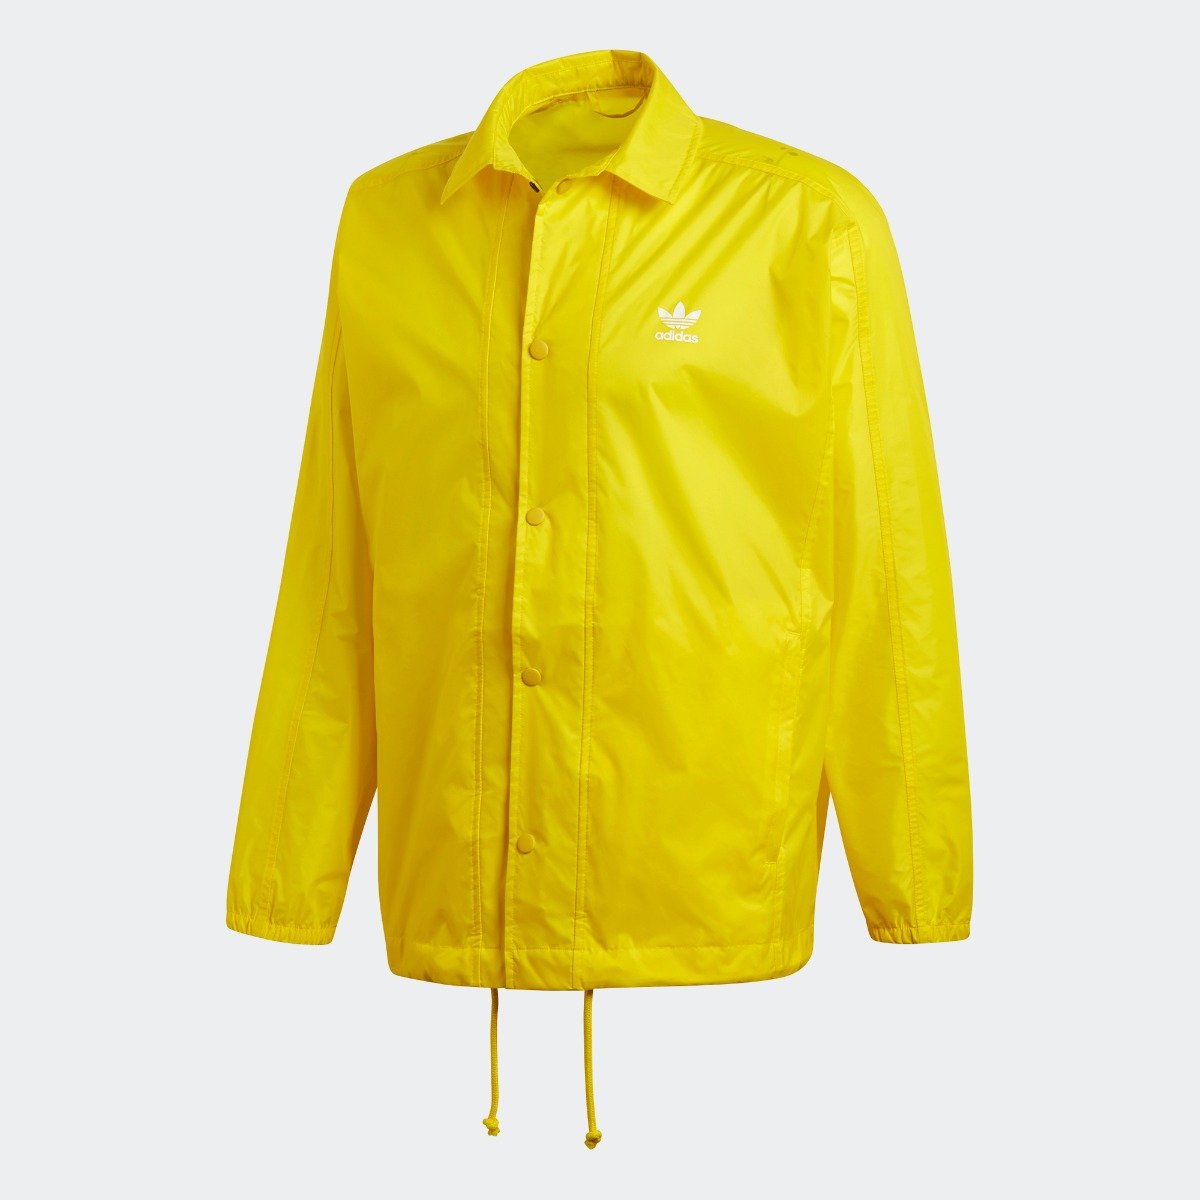 adidas originals yellow jacket